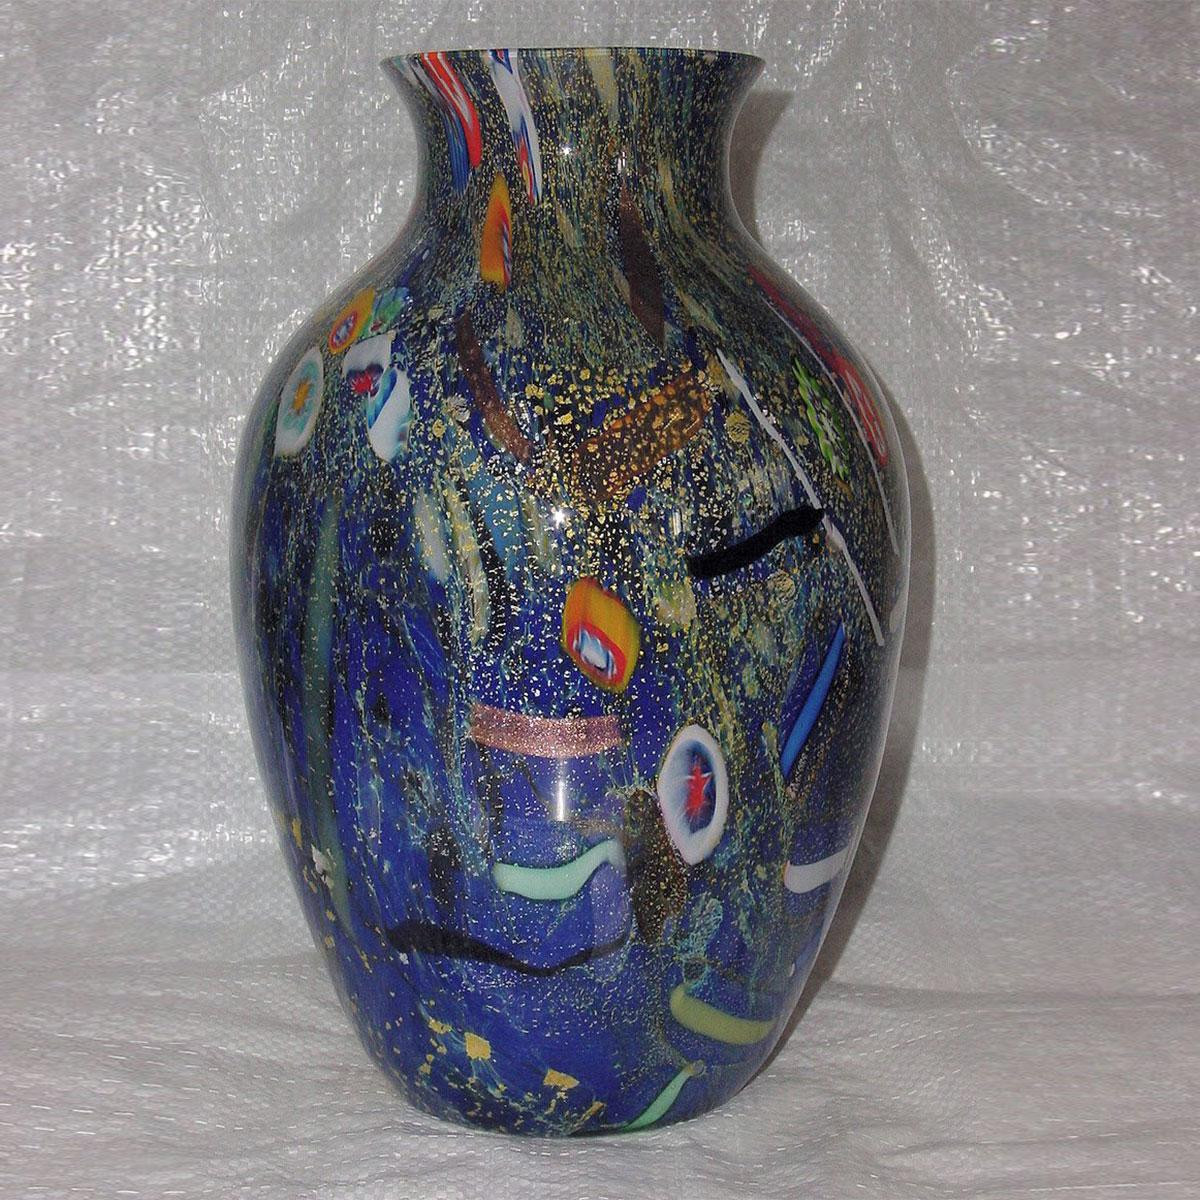 "Pablito" Murano vase  - Groot - blau und vielfarbig 